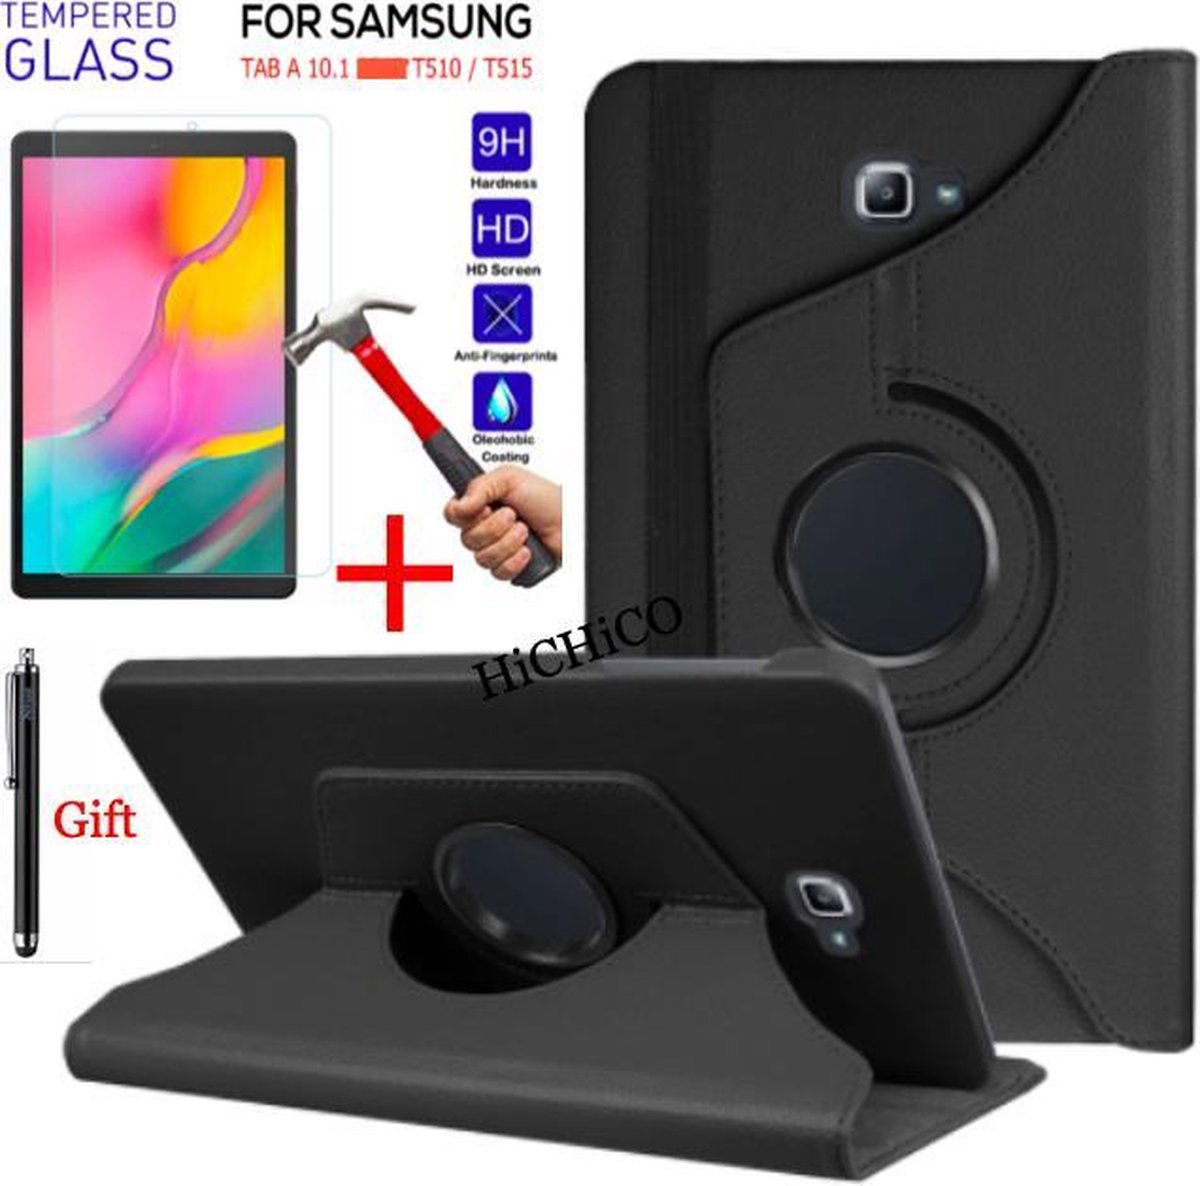 Protecteur d'écran Samsung Galaxy Tab A 10.1, film de protection d'écran en  verre trempé pour Samsung Galaxy Tab A 10.1 2016 T510 / T515 